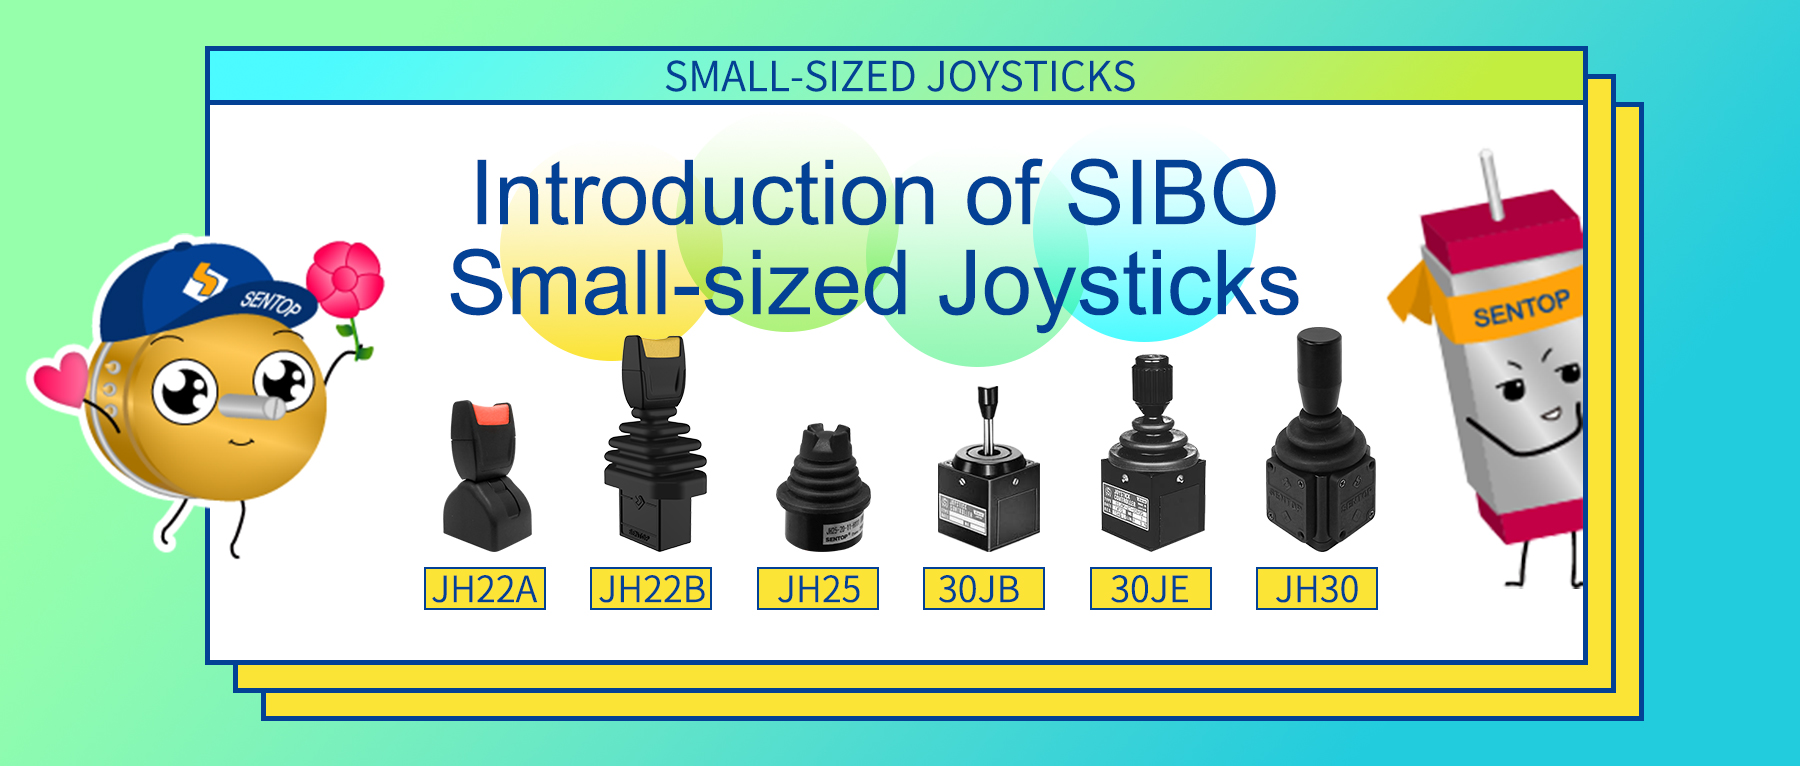 Introduction of SIBO Small-sized Joysticks